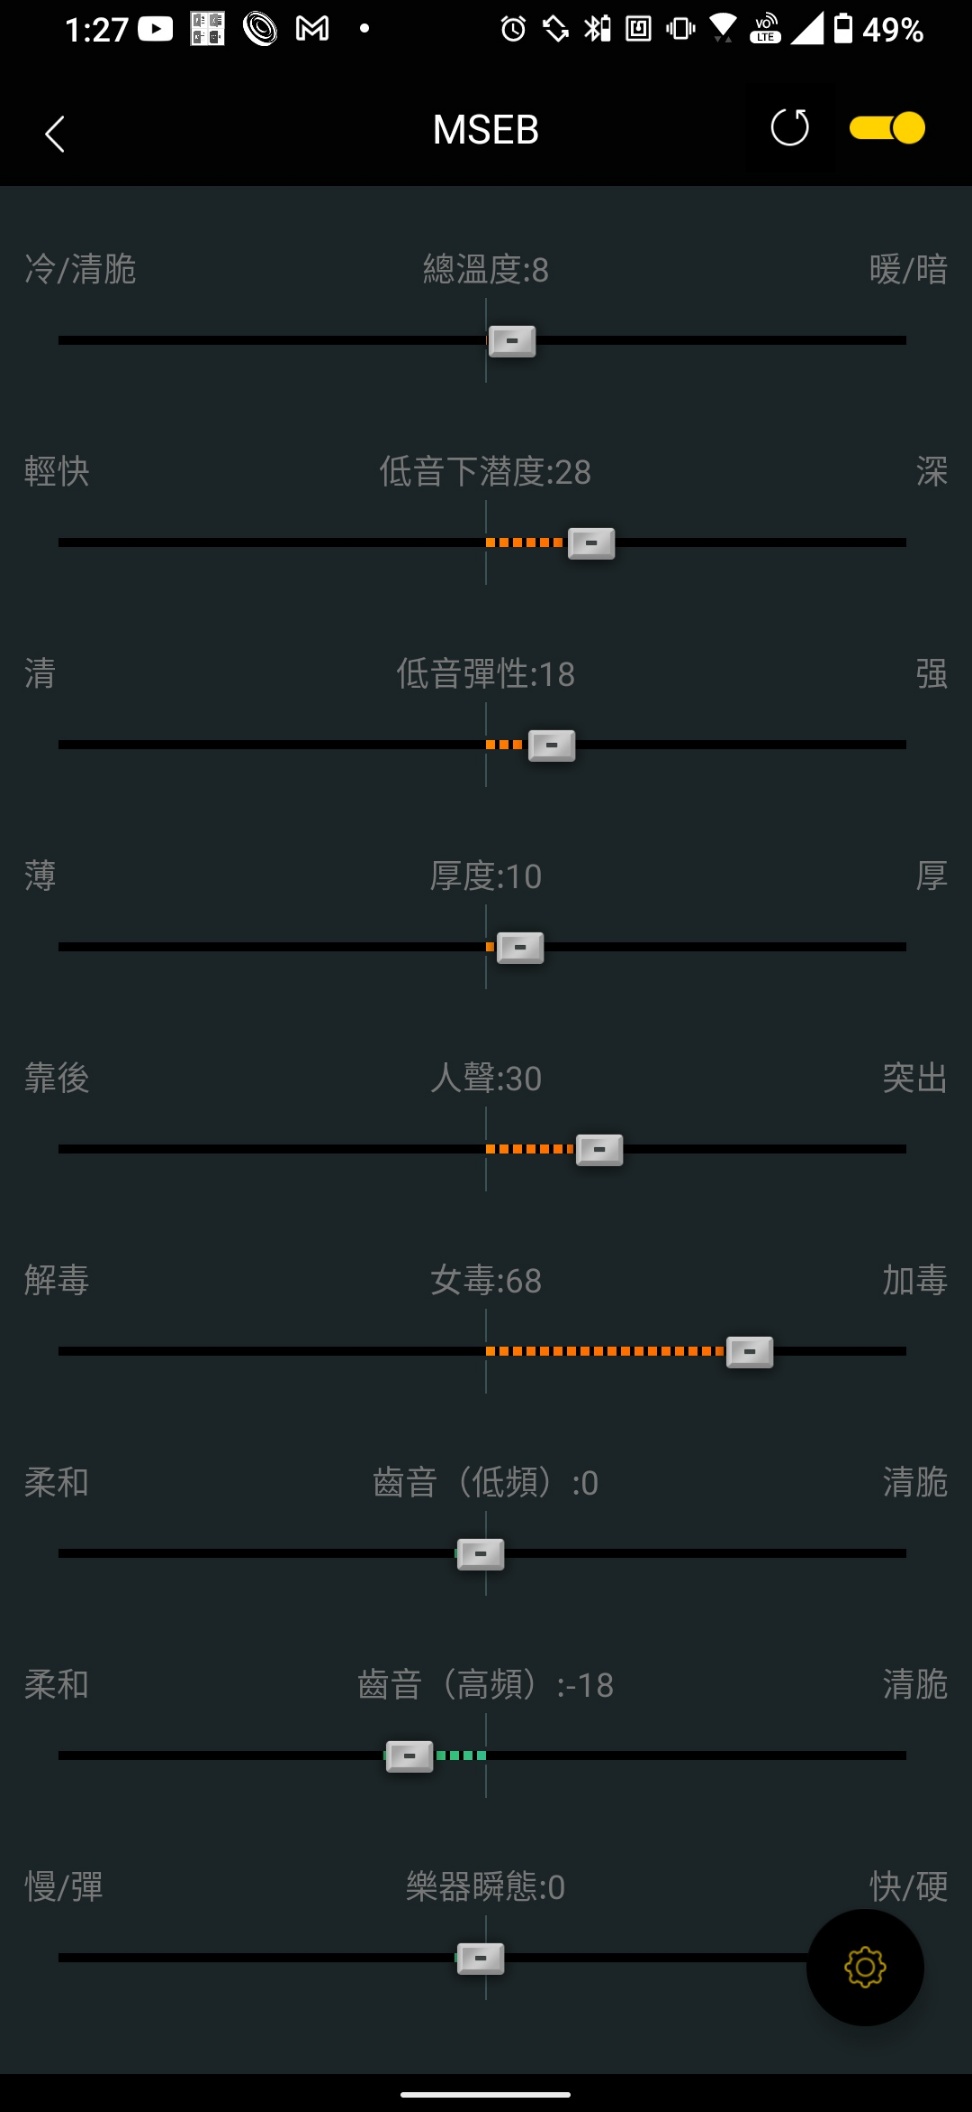 Uploaded_via_HKEPC_IR_Pro_Android(88fb5).jpg